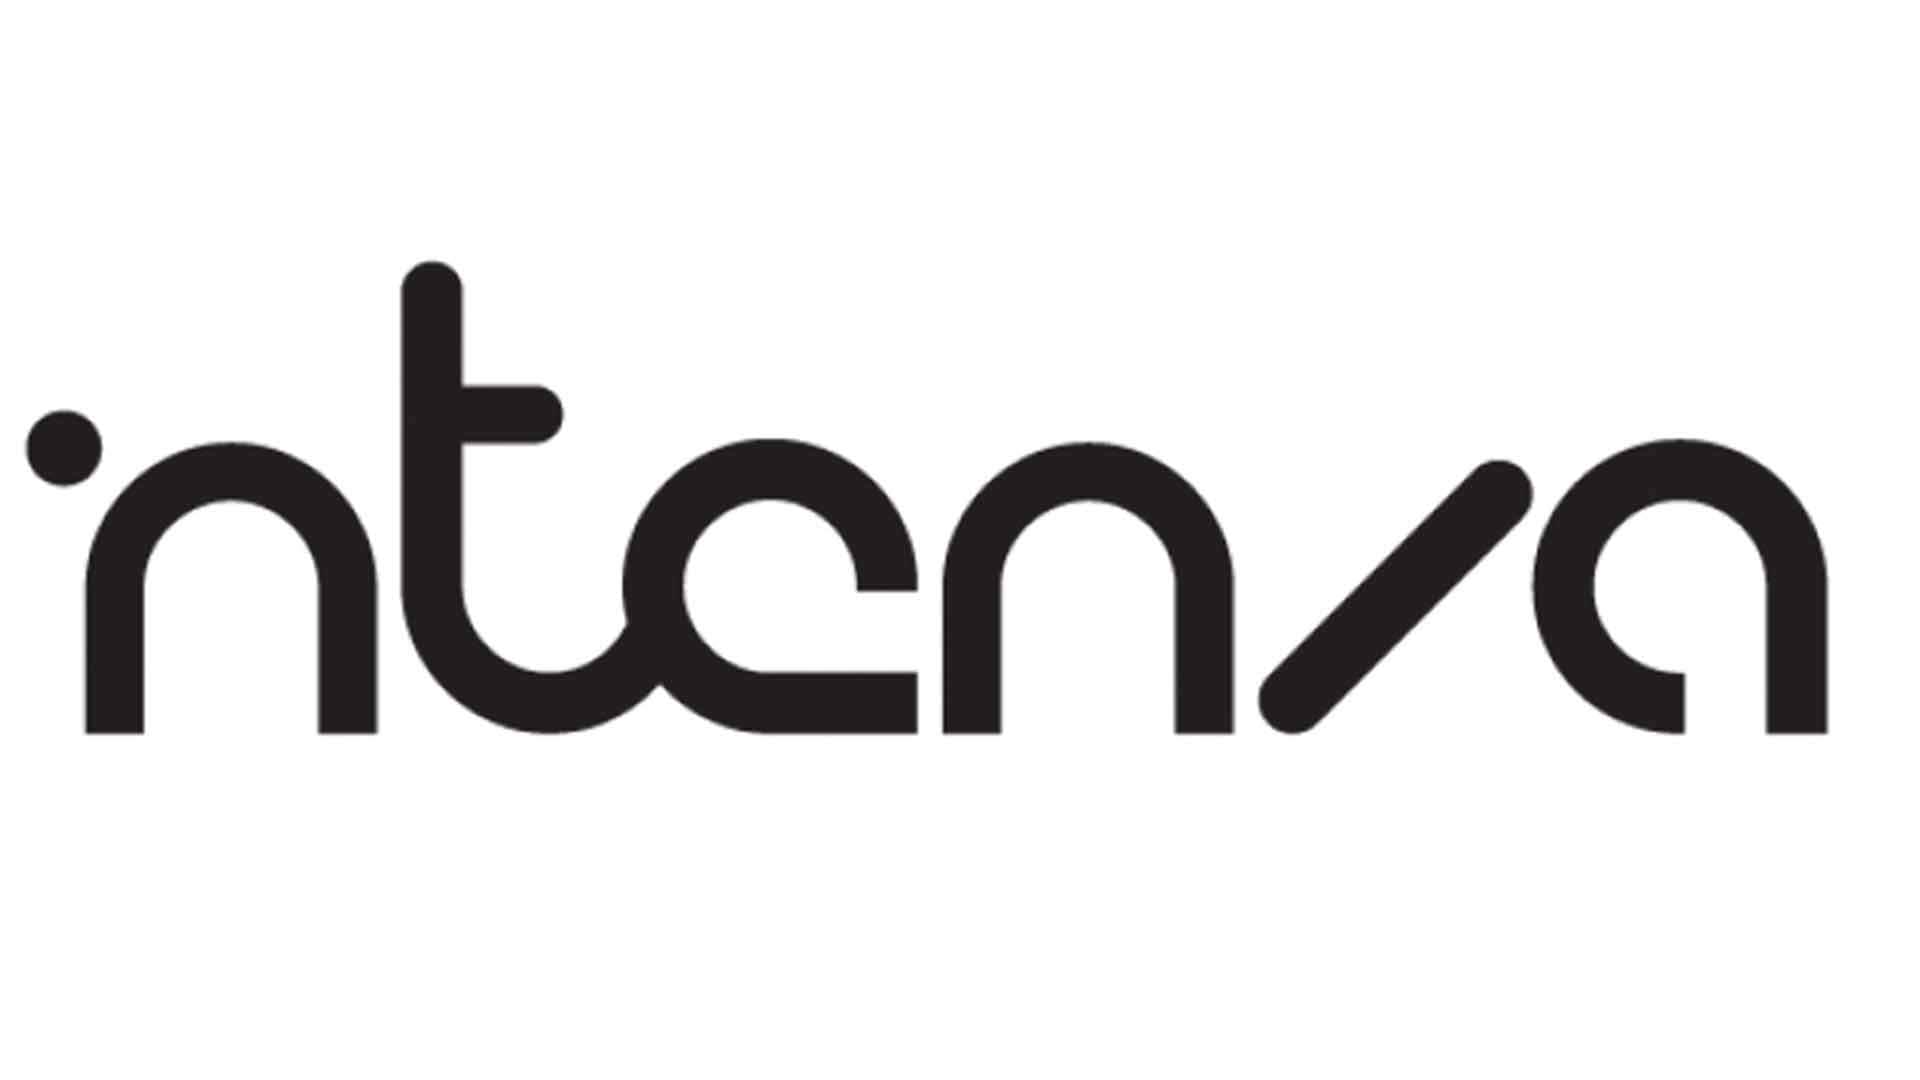 A black and white logo of ten